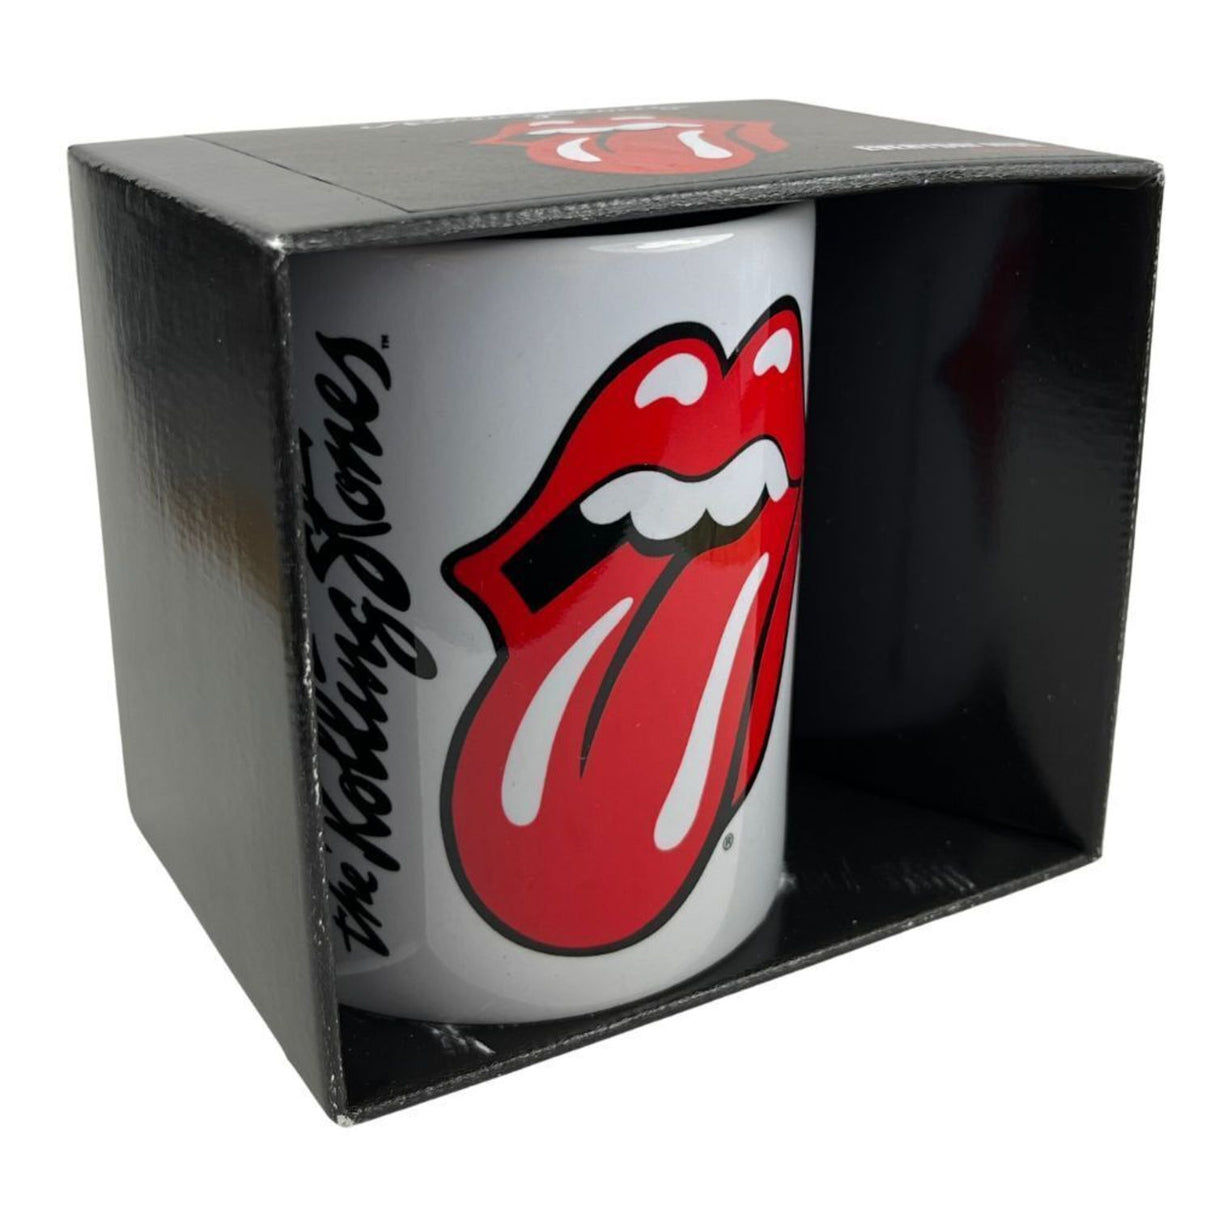 The Rolling Stones Tongue & Lips Logo Kaffeebecher